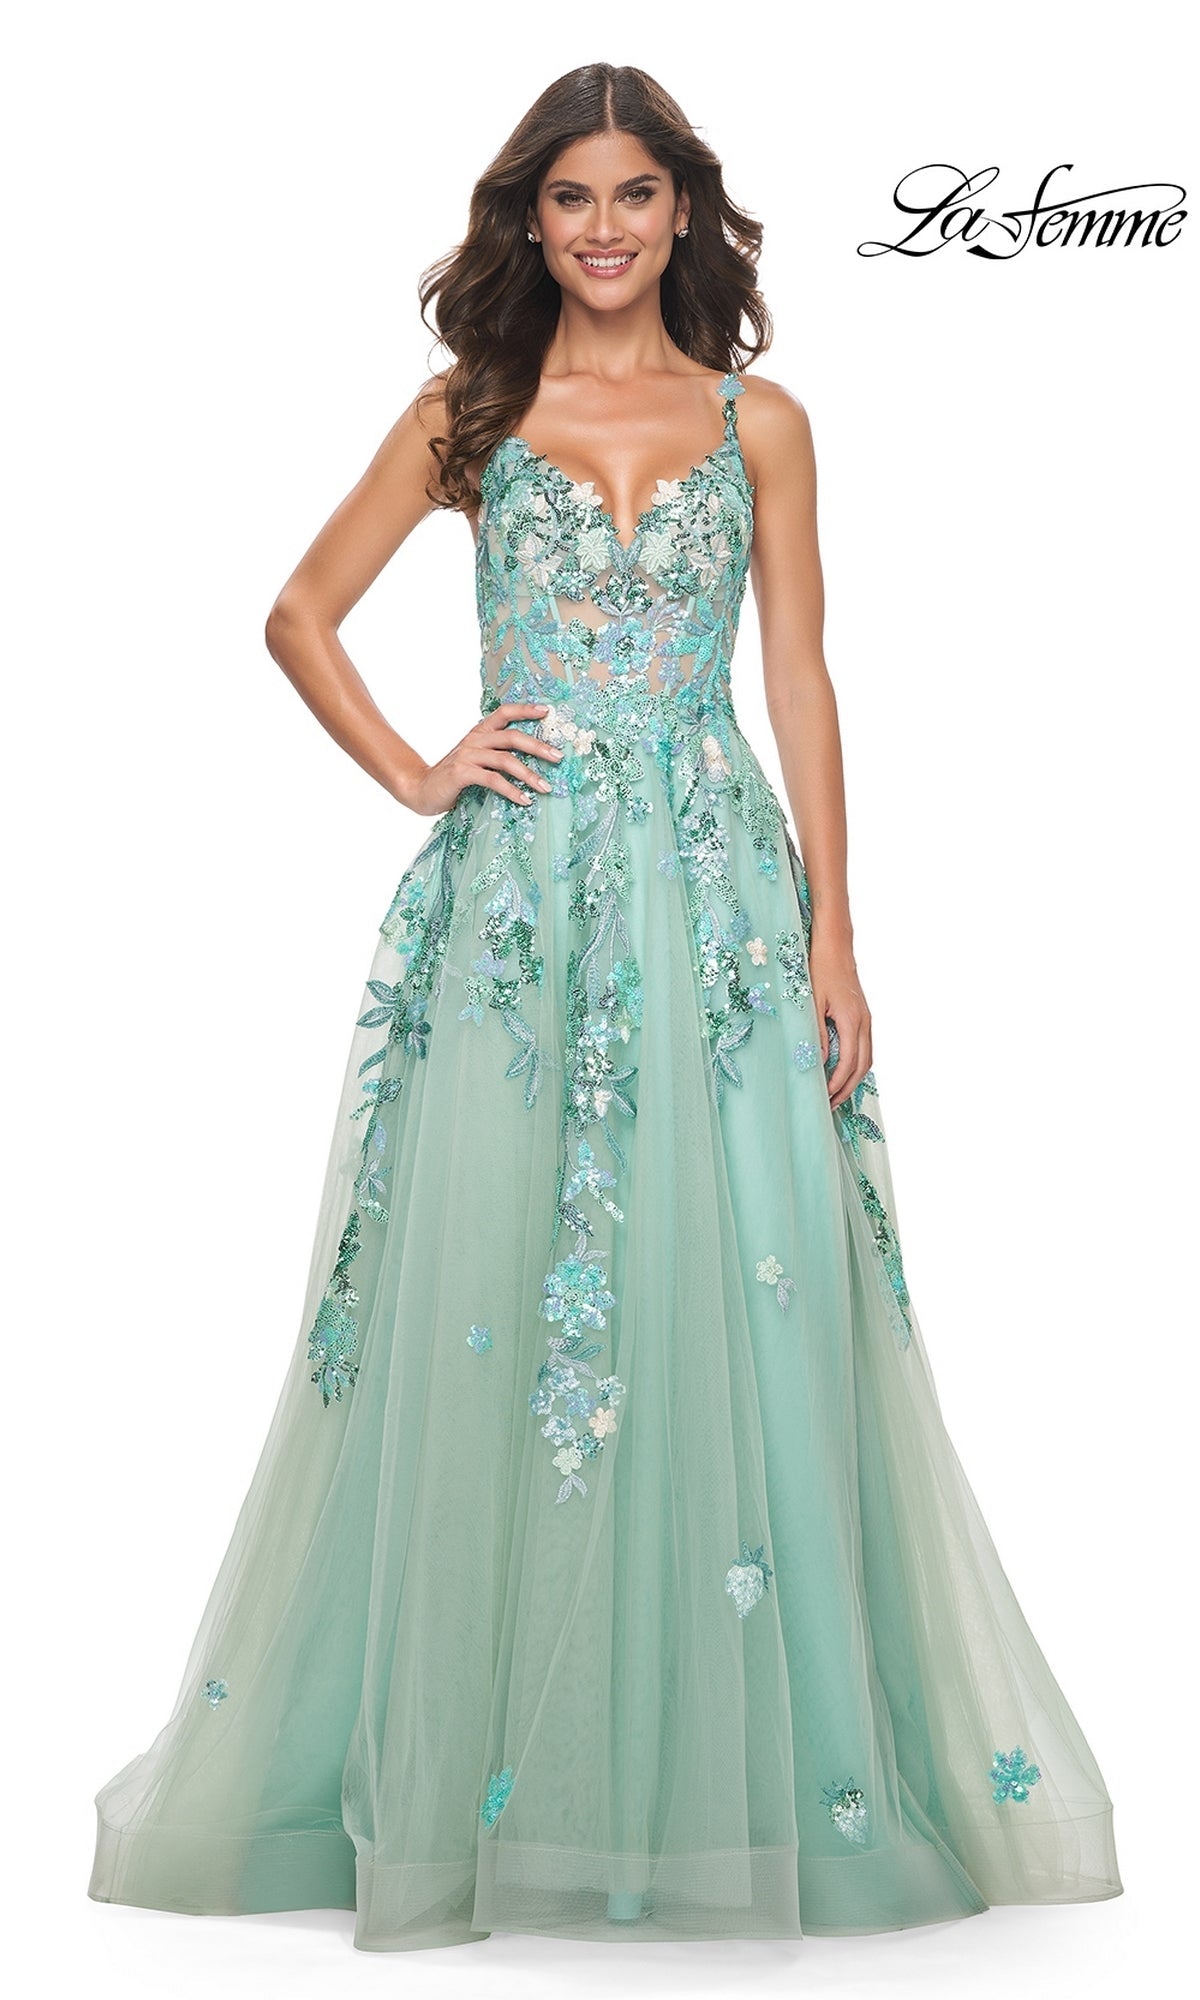  La Femme 32347 Formal Prom Dress